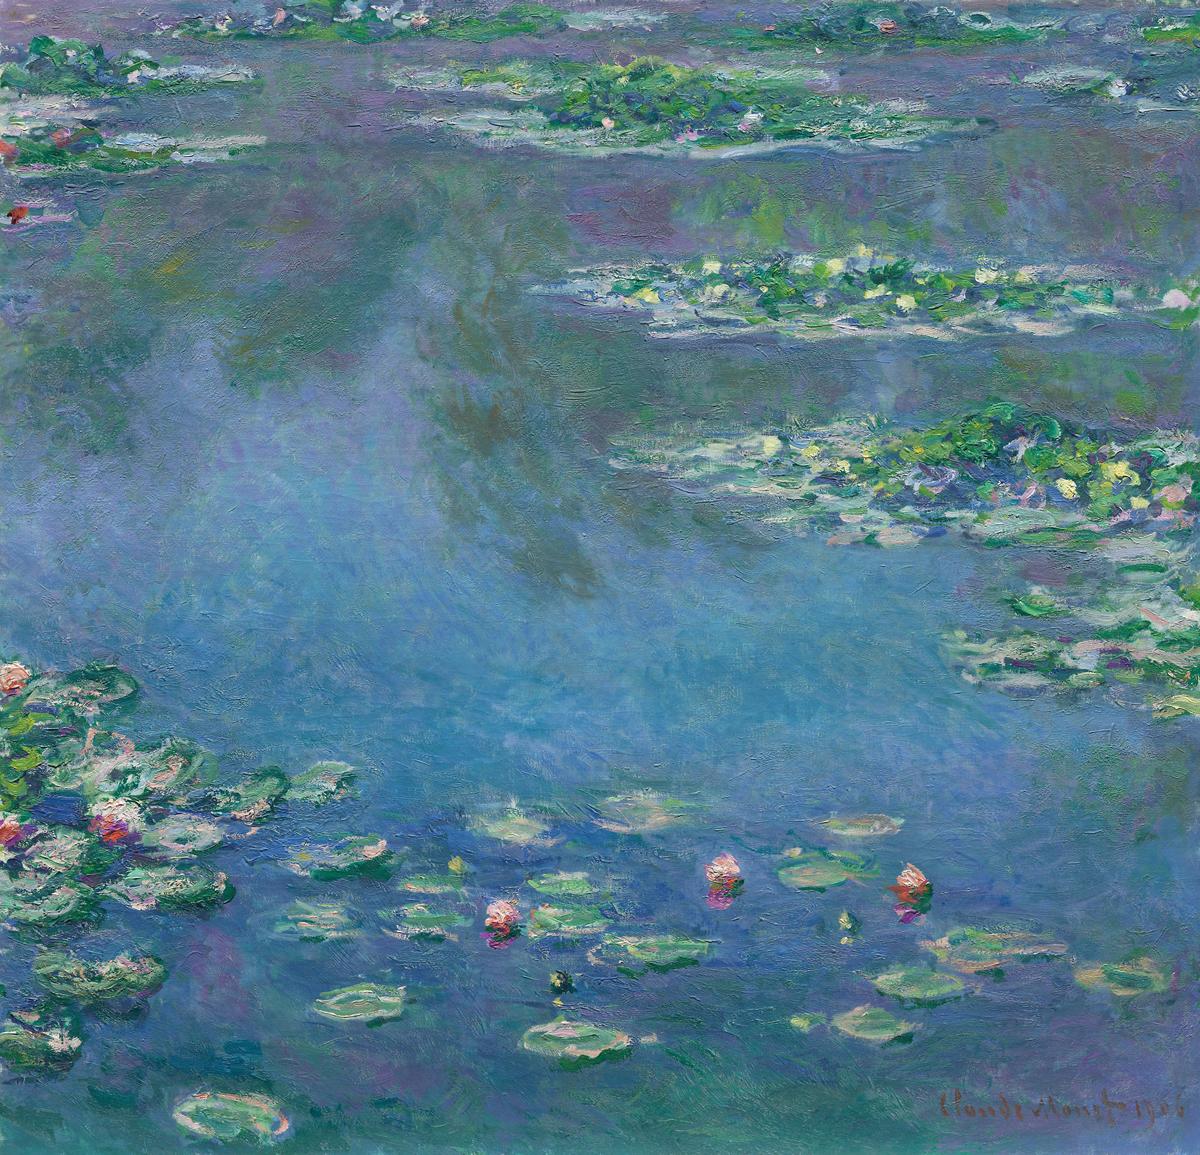 painting by Matt Kane - “Water Lilies after Claude Monet” - detail 1